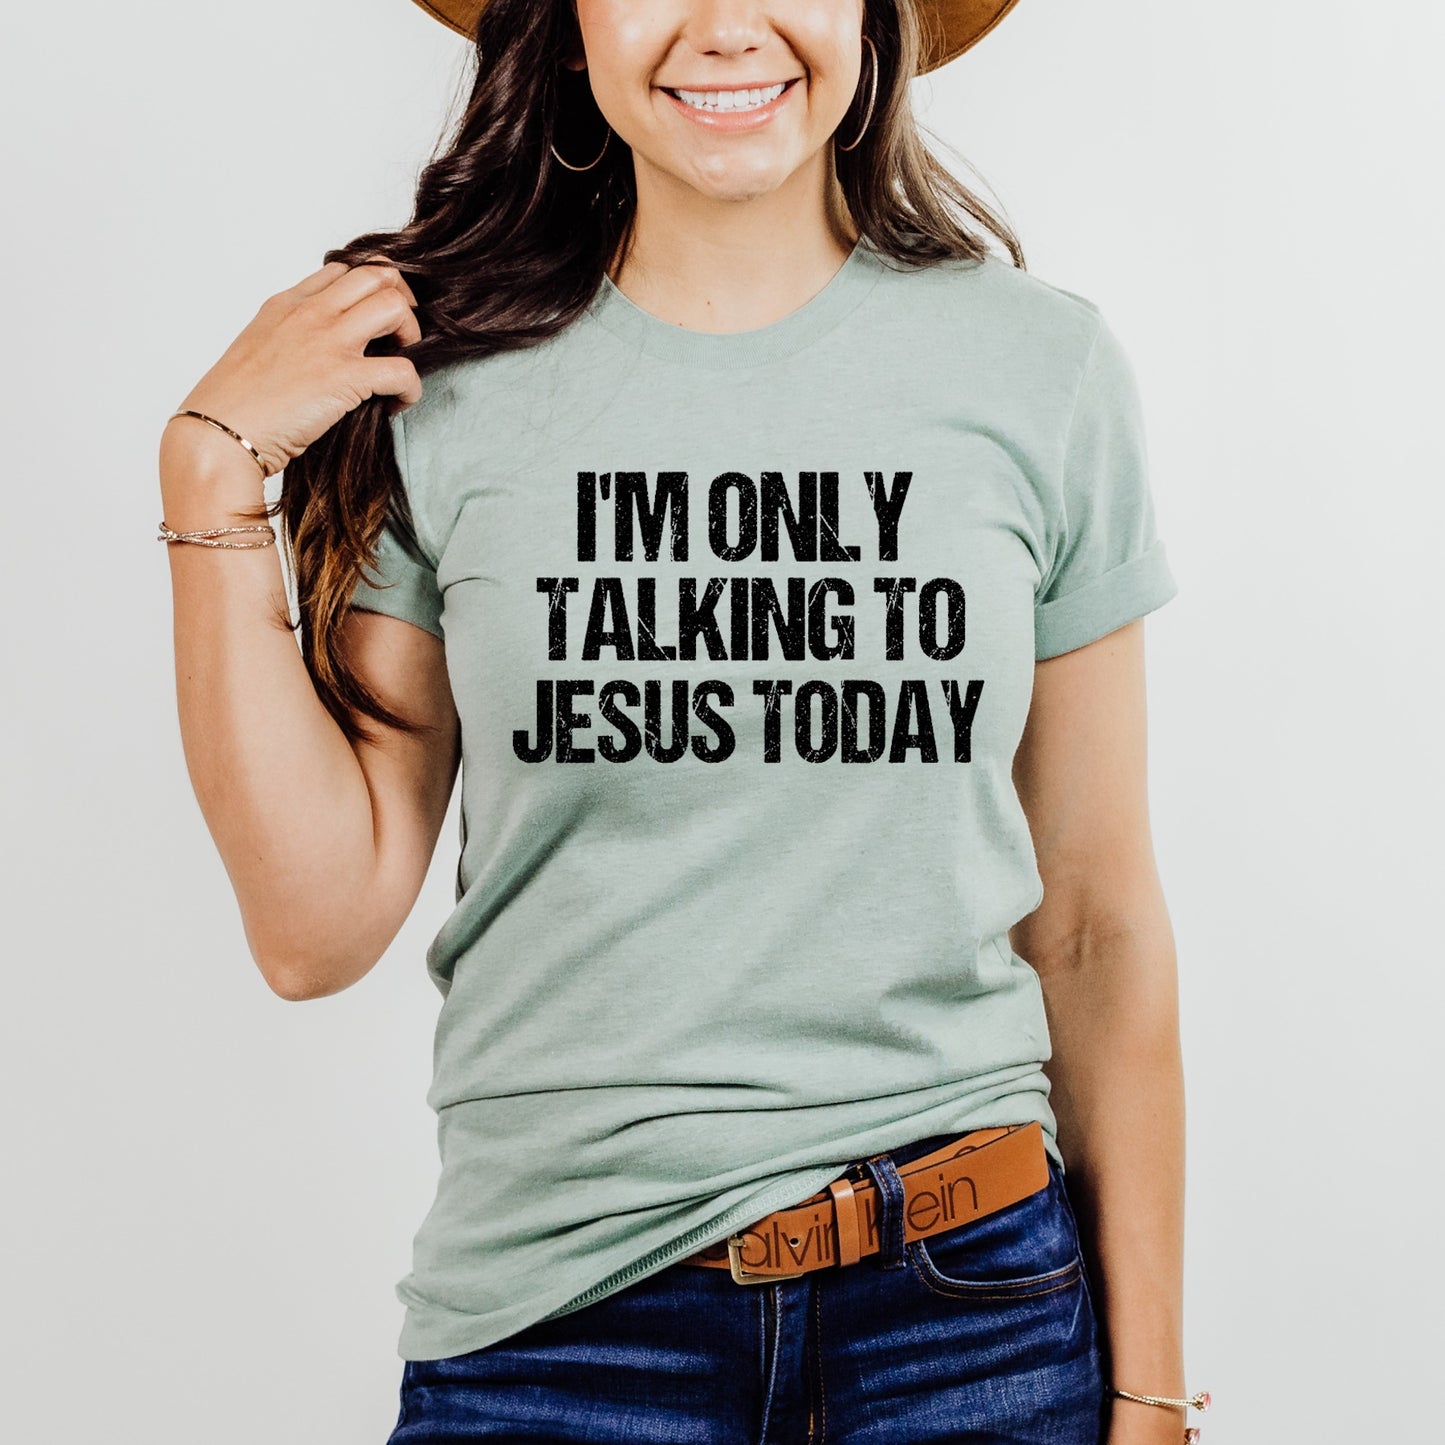 I'm Only Talking To Jesus Today, Christian Humor, Faith Shirt, Jesus Love, Christian Gift Unisex Tee Novelty T-Shirt